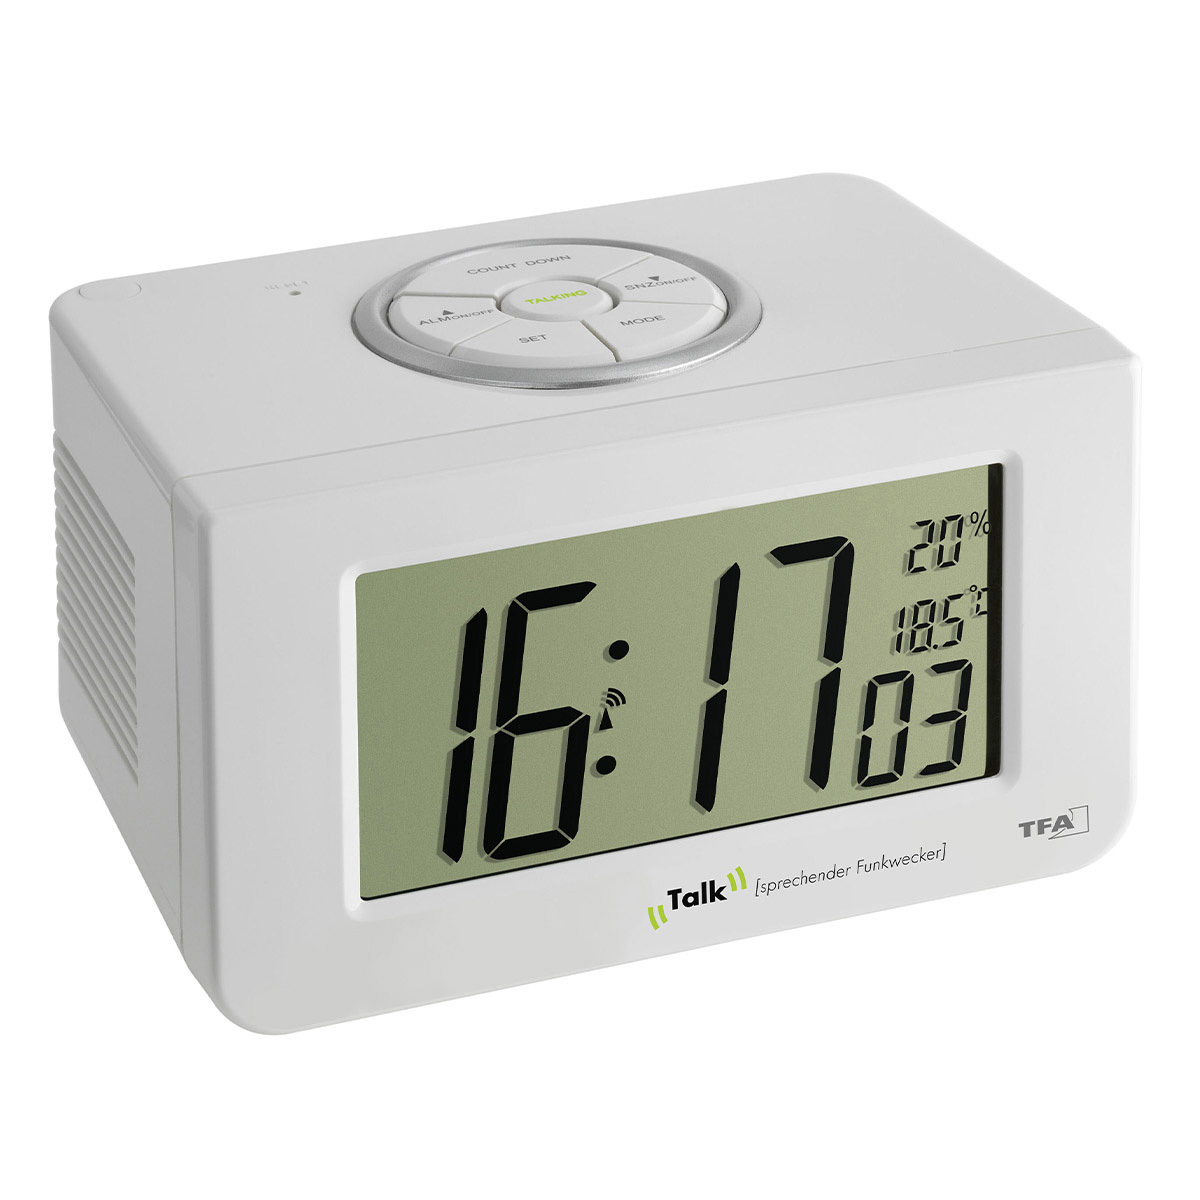 Talking radio-controlled alarm clock